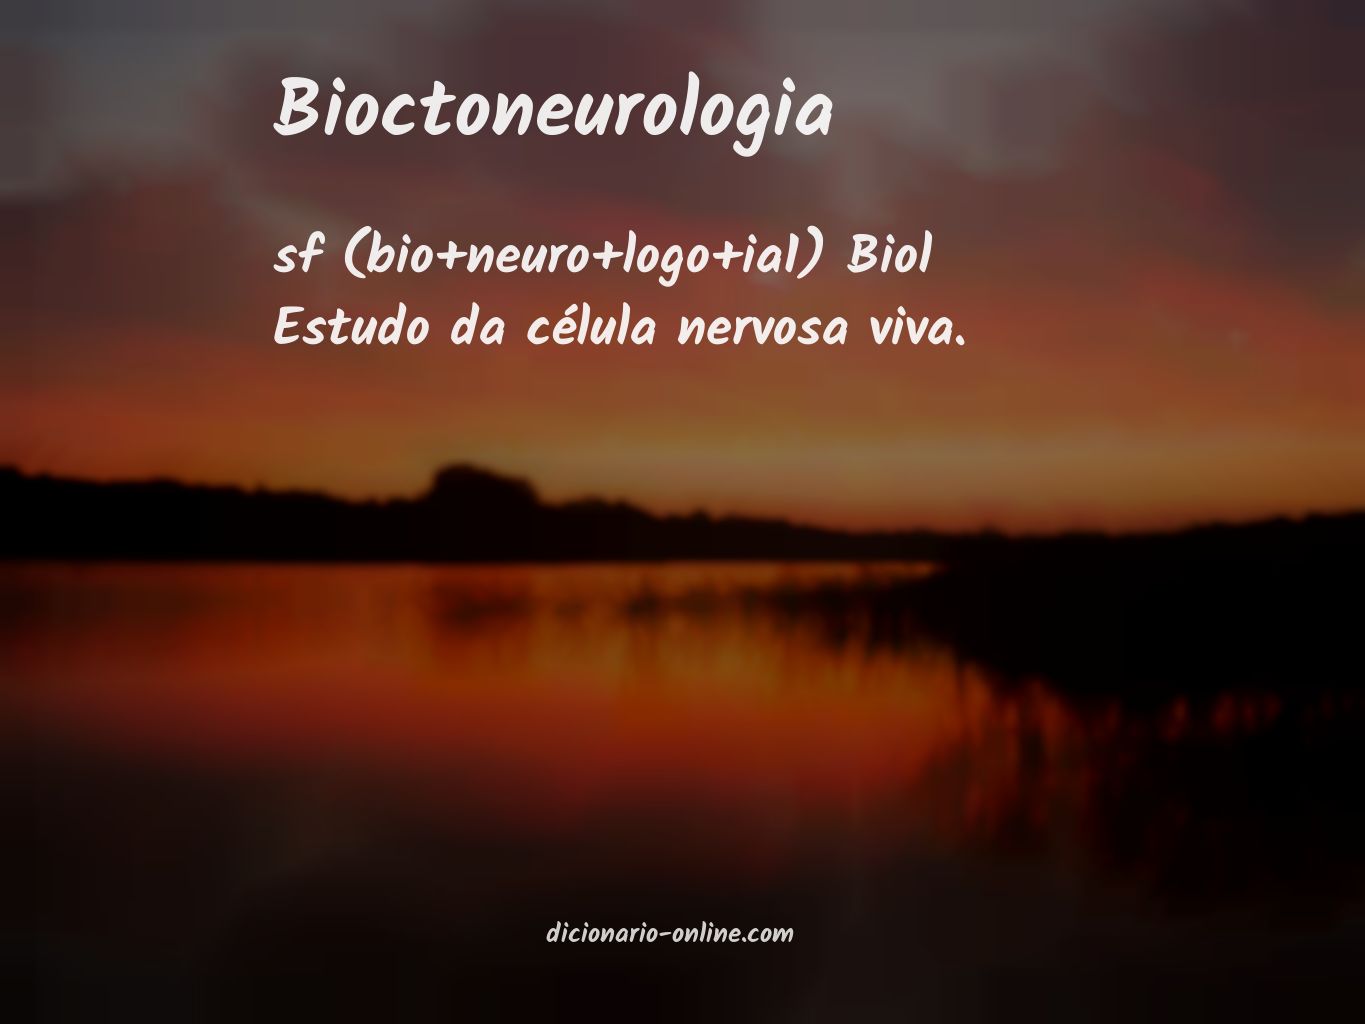 Significado de bioctoneurologia